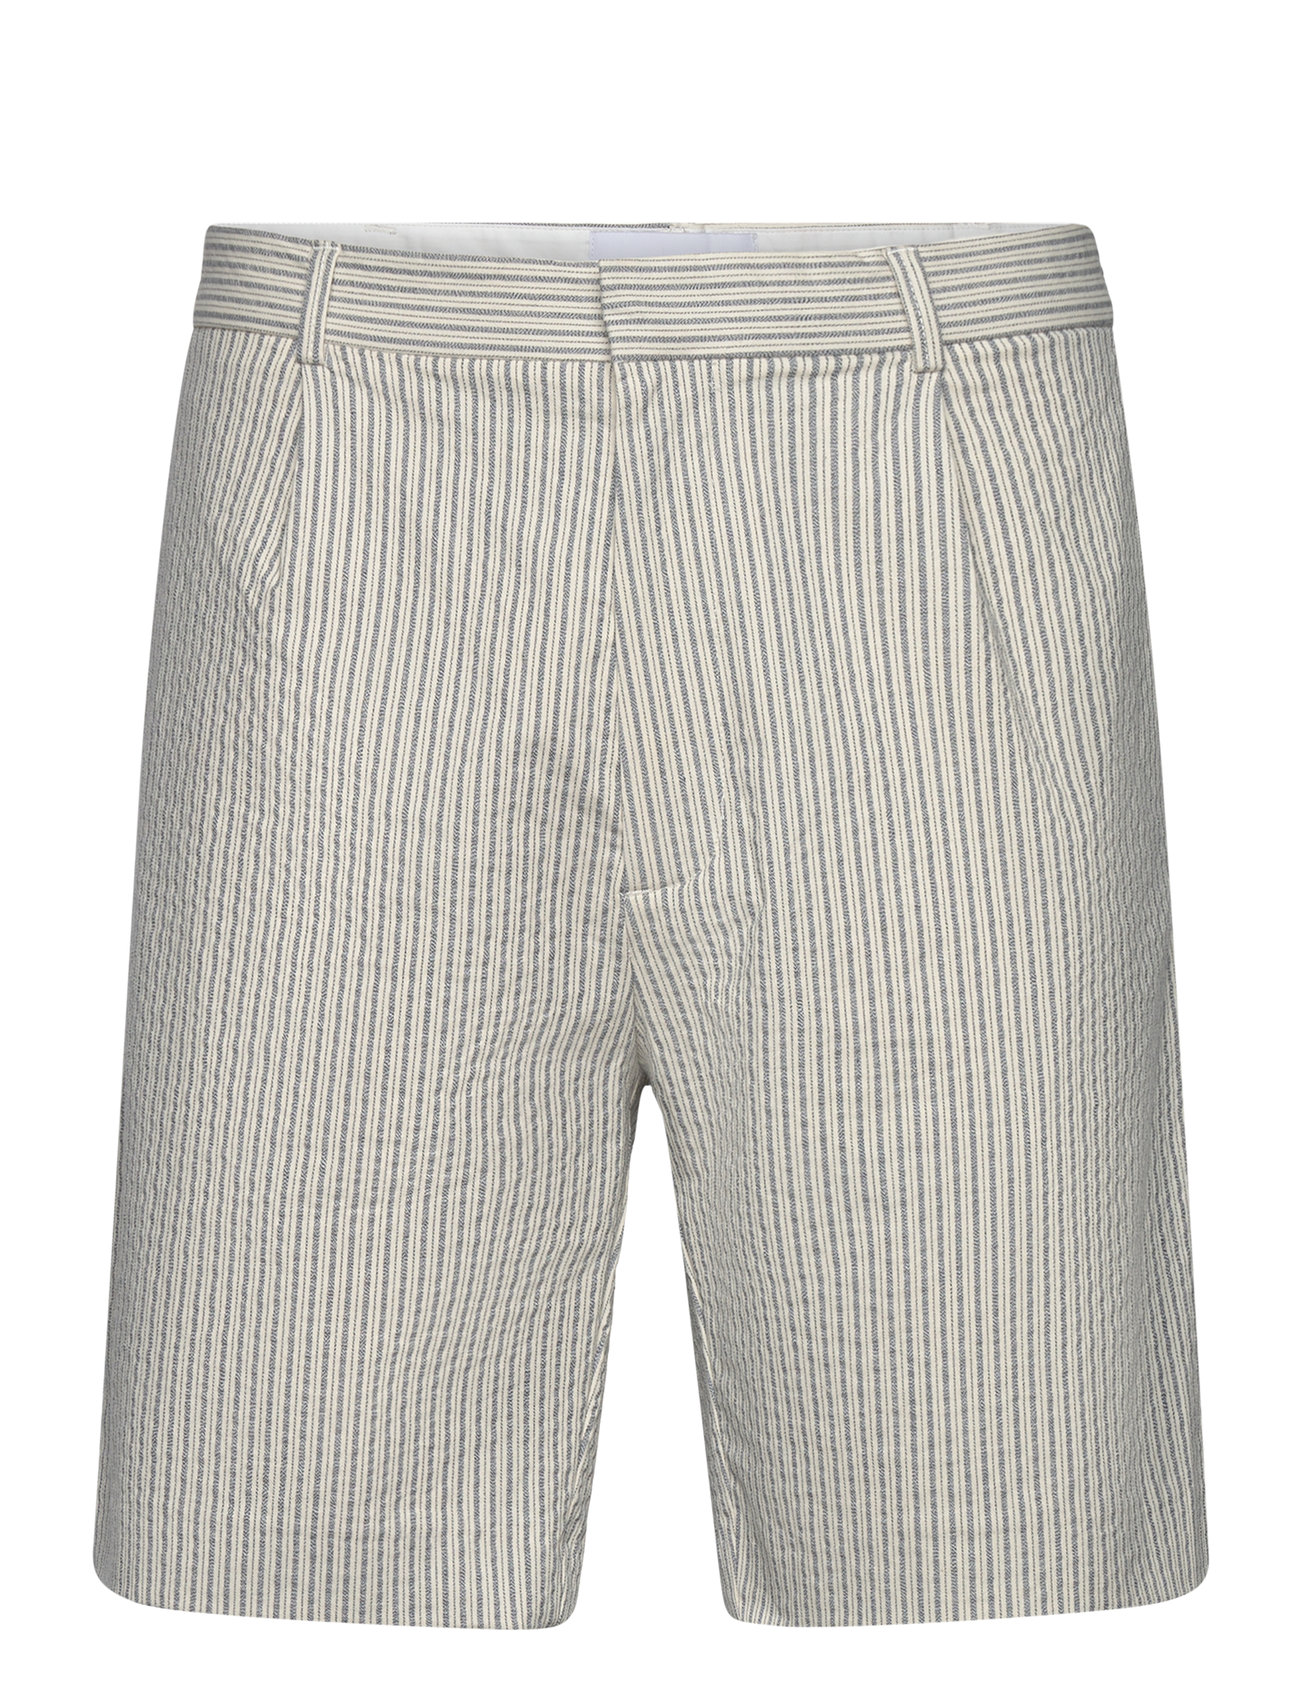 Linton Pleat Short Stripe Ecru Designers Shorts Chinos Shorts White Wax London